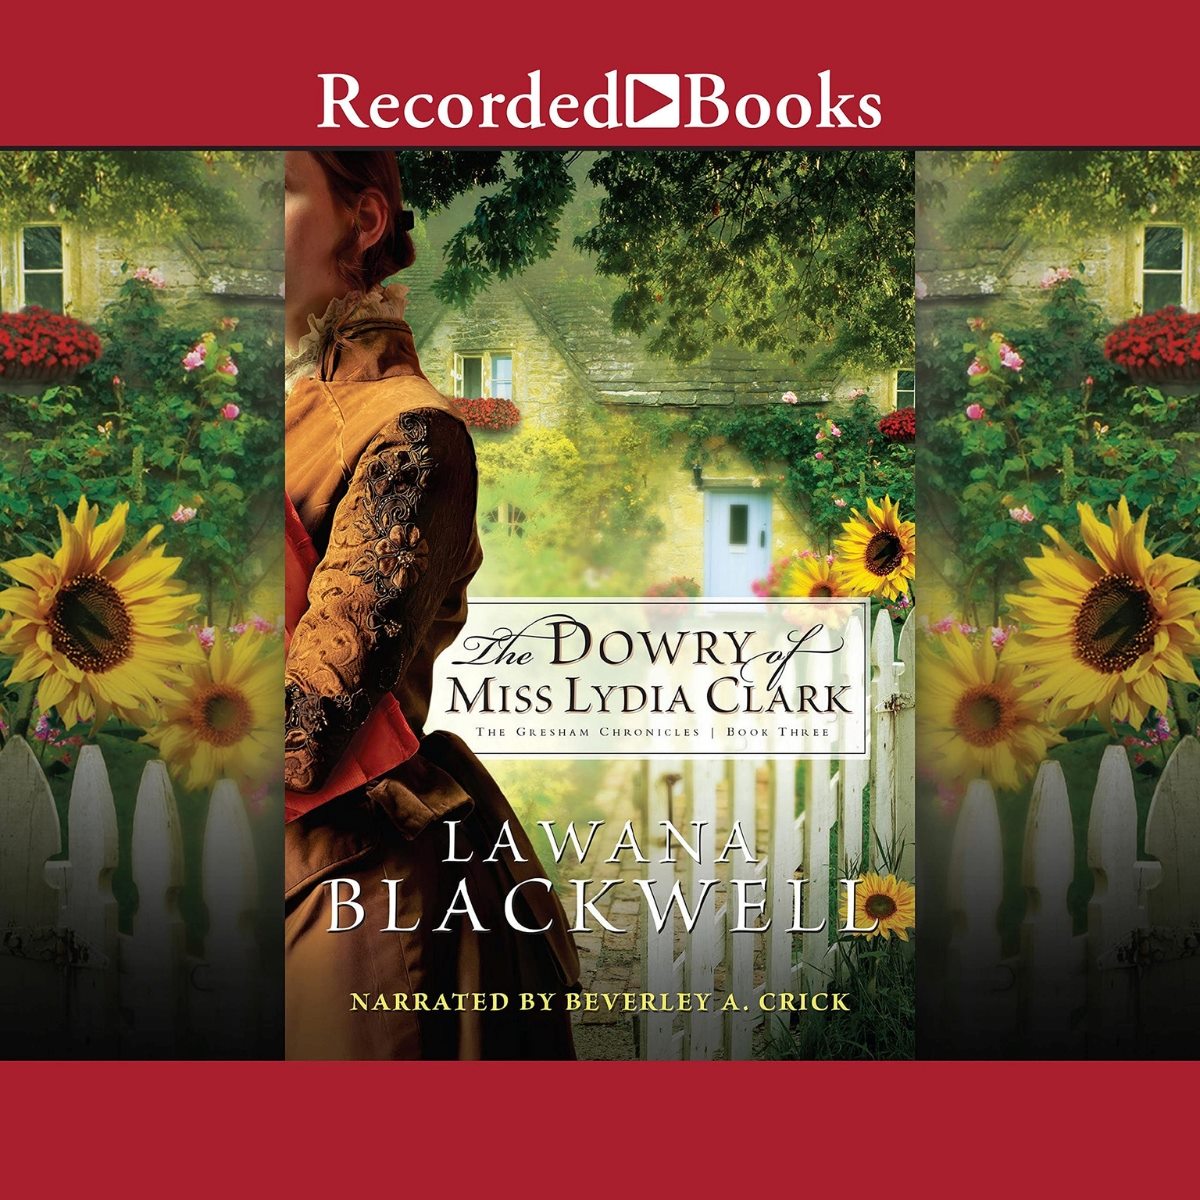 8-amazing-lawana-blackwell-kindle-books-for-2023